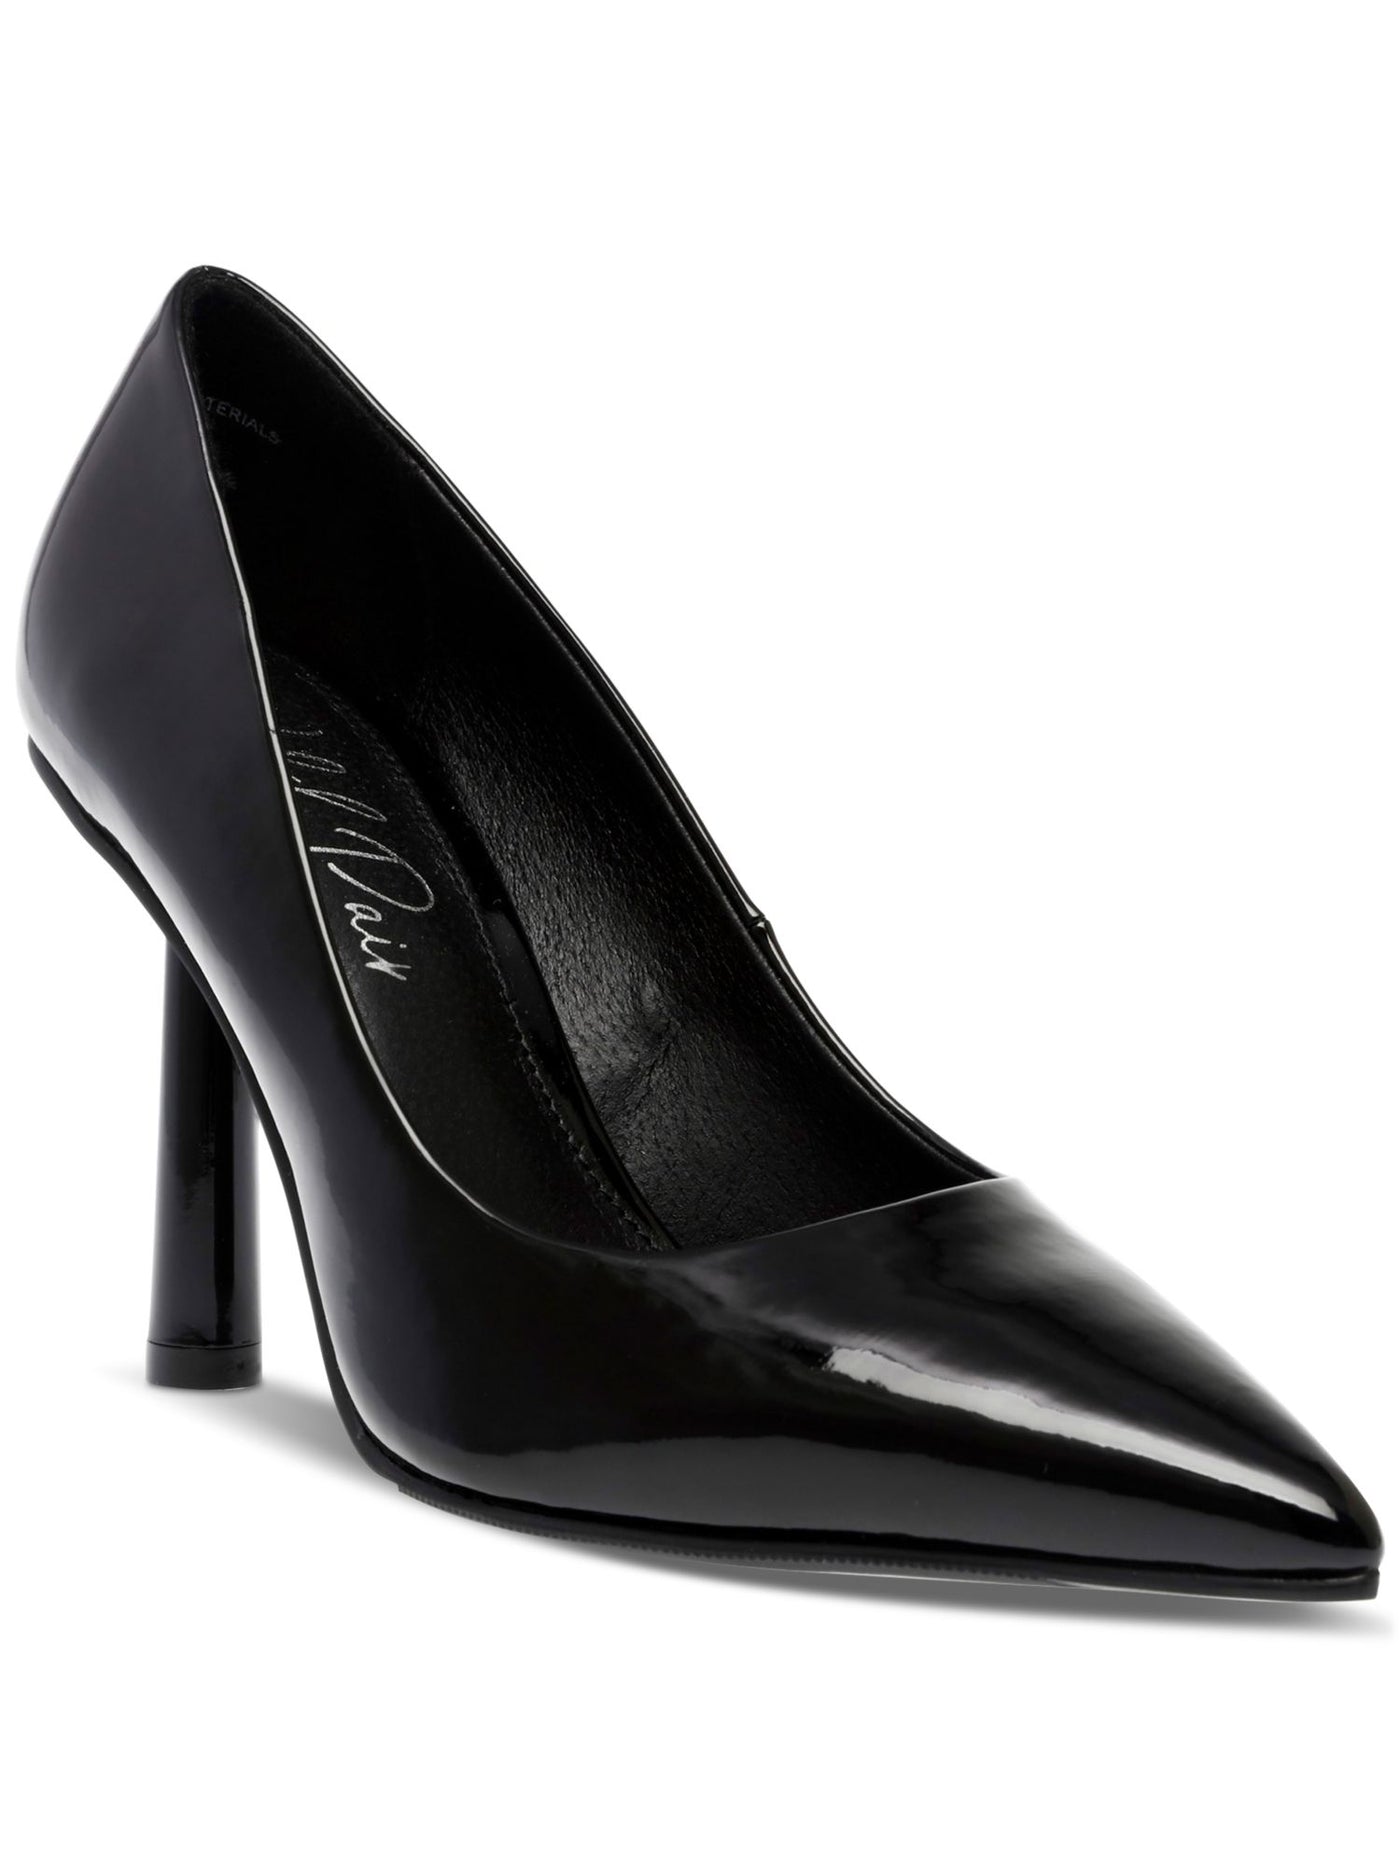 WILD PAIR Womens Black Slip Resistant Comfort Taraa Pointed Toe Stiletto Slip On Pumps Shoes 8.5 M